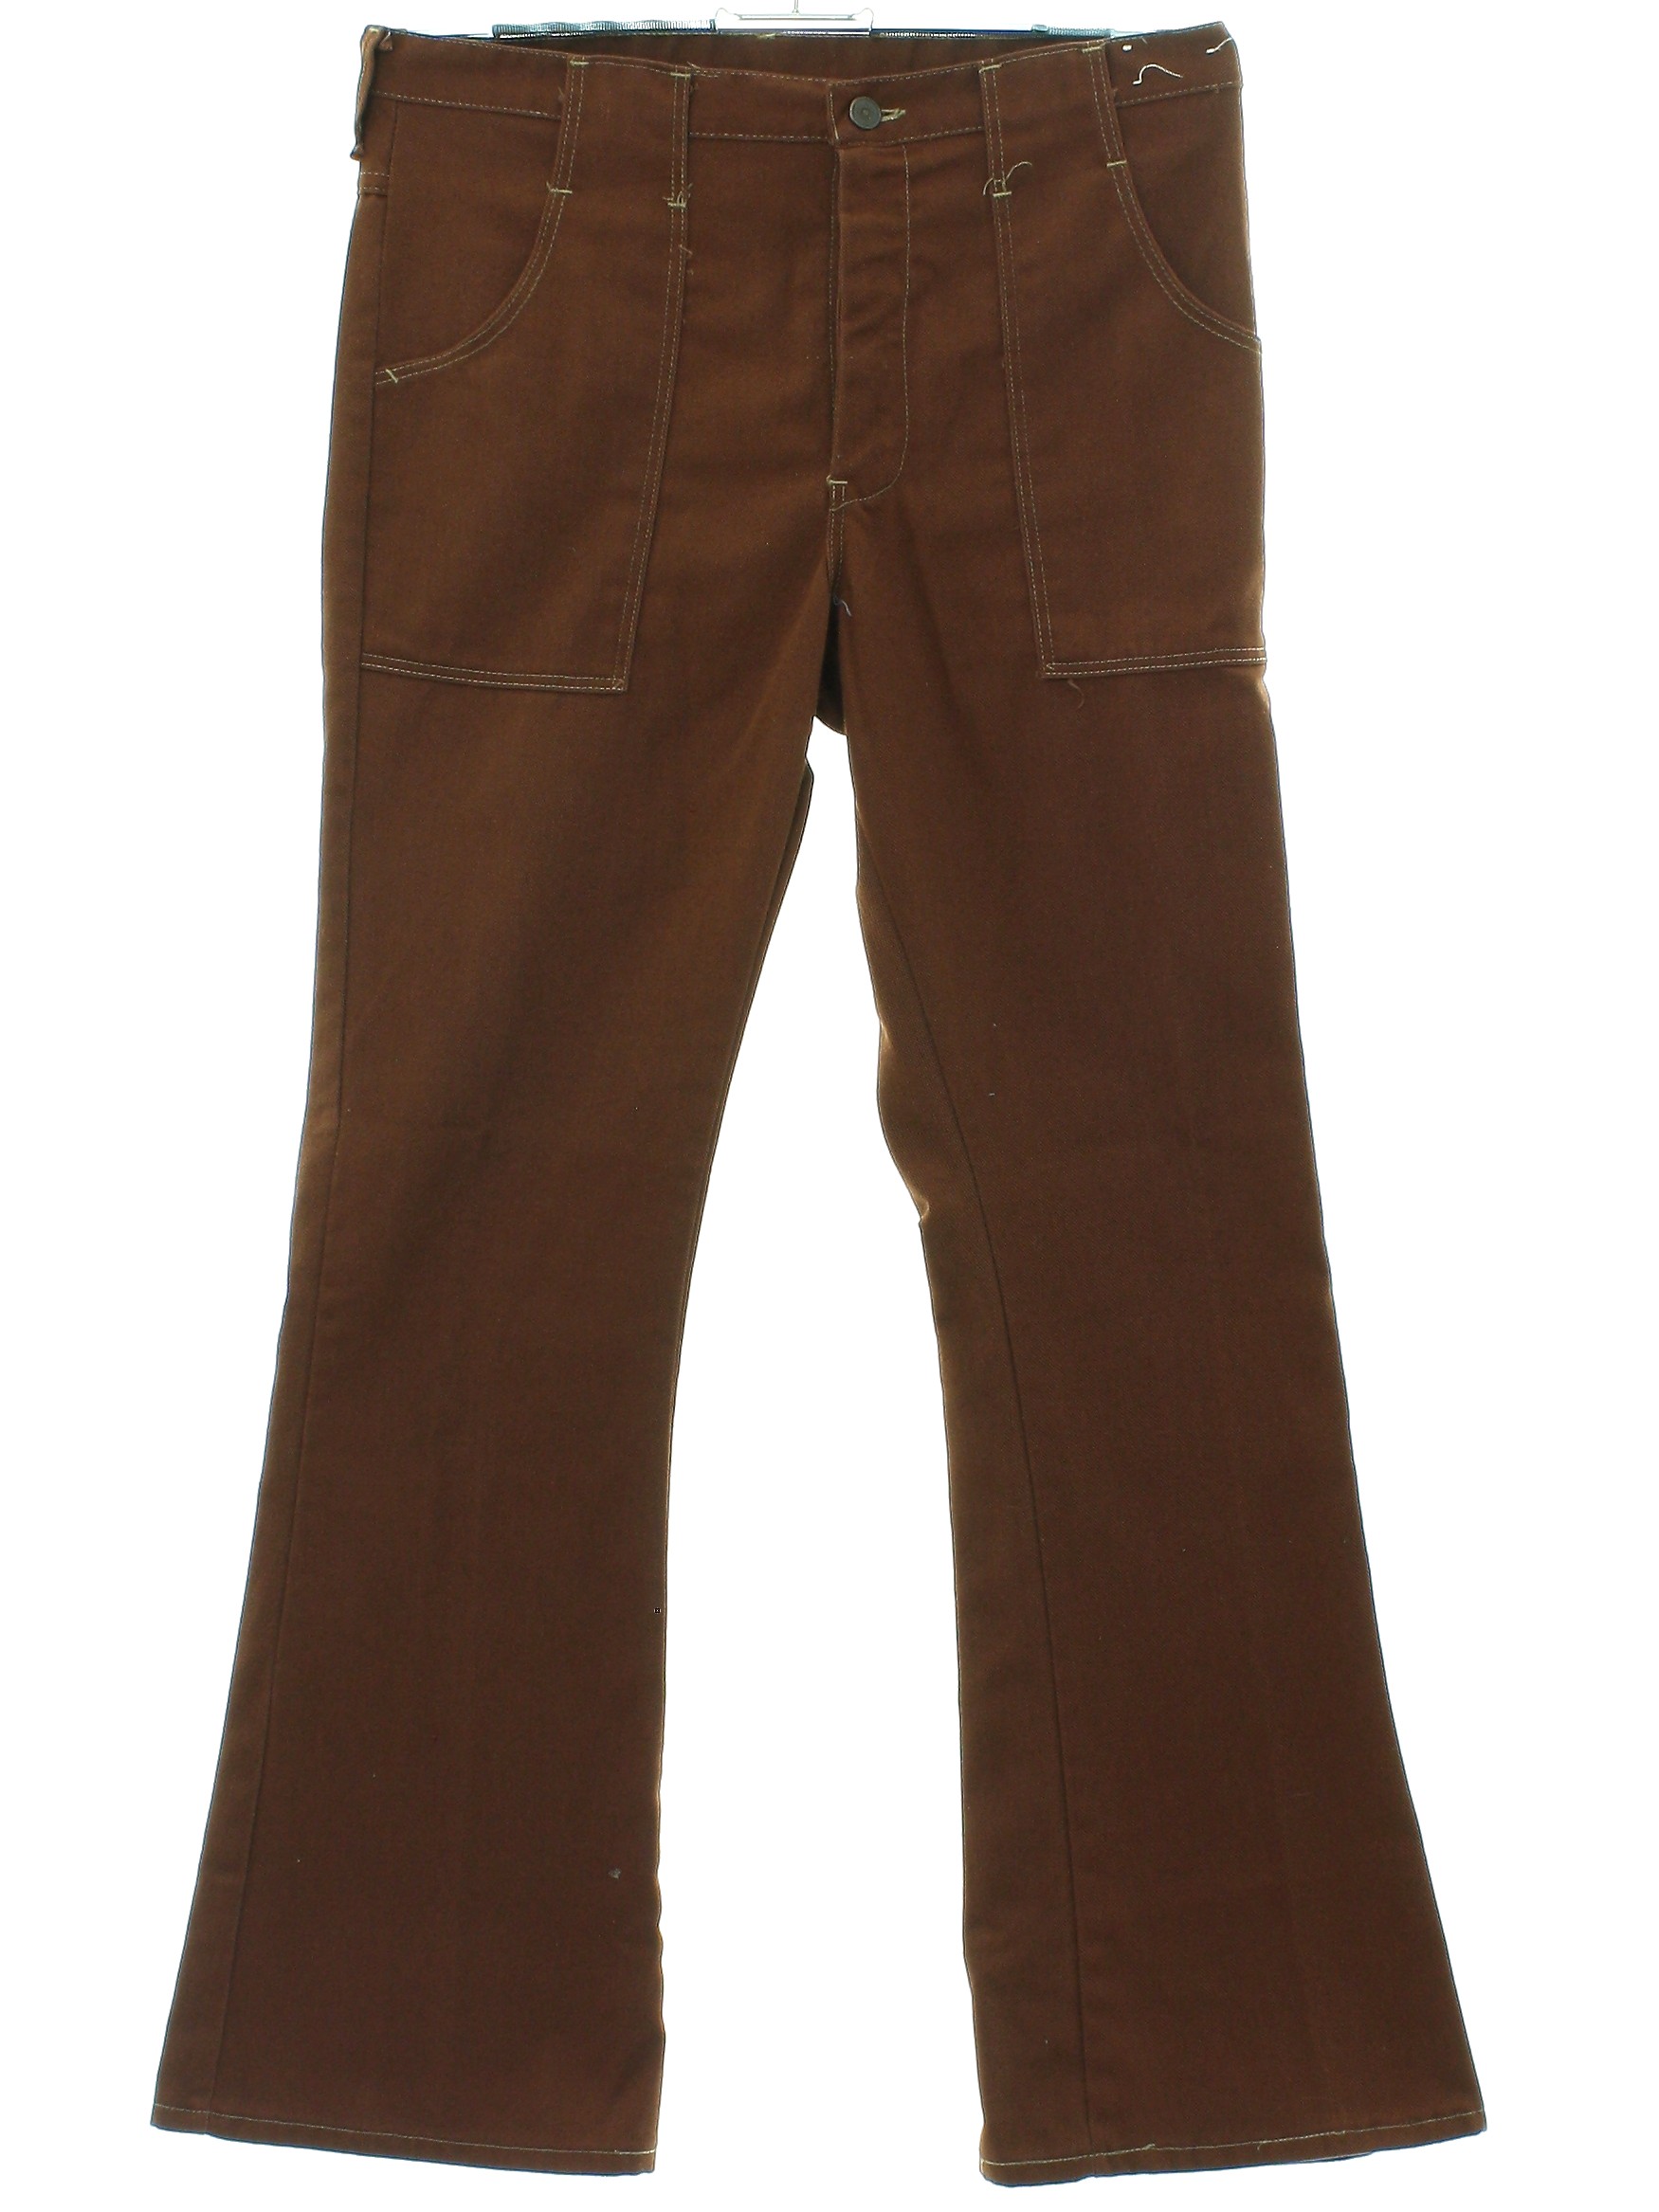 Retro 70's Bellbottom Pants: 70s -No Label- Mens terracotta brown ...